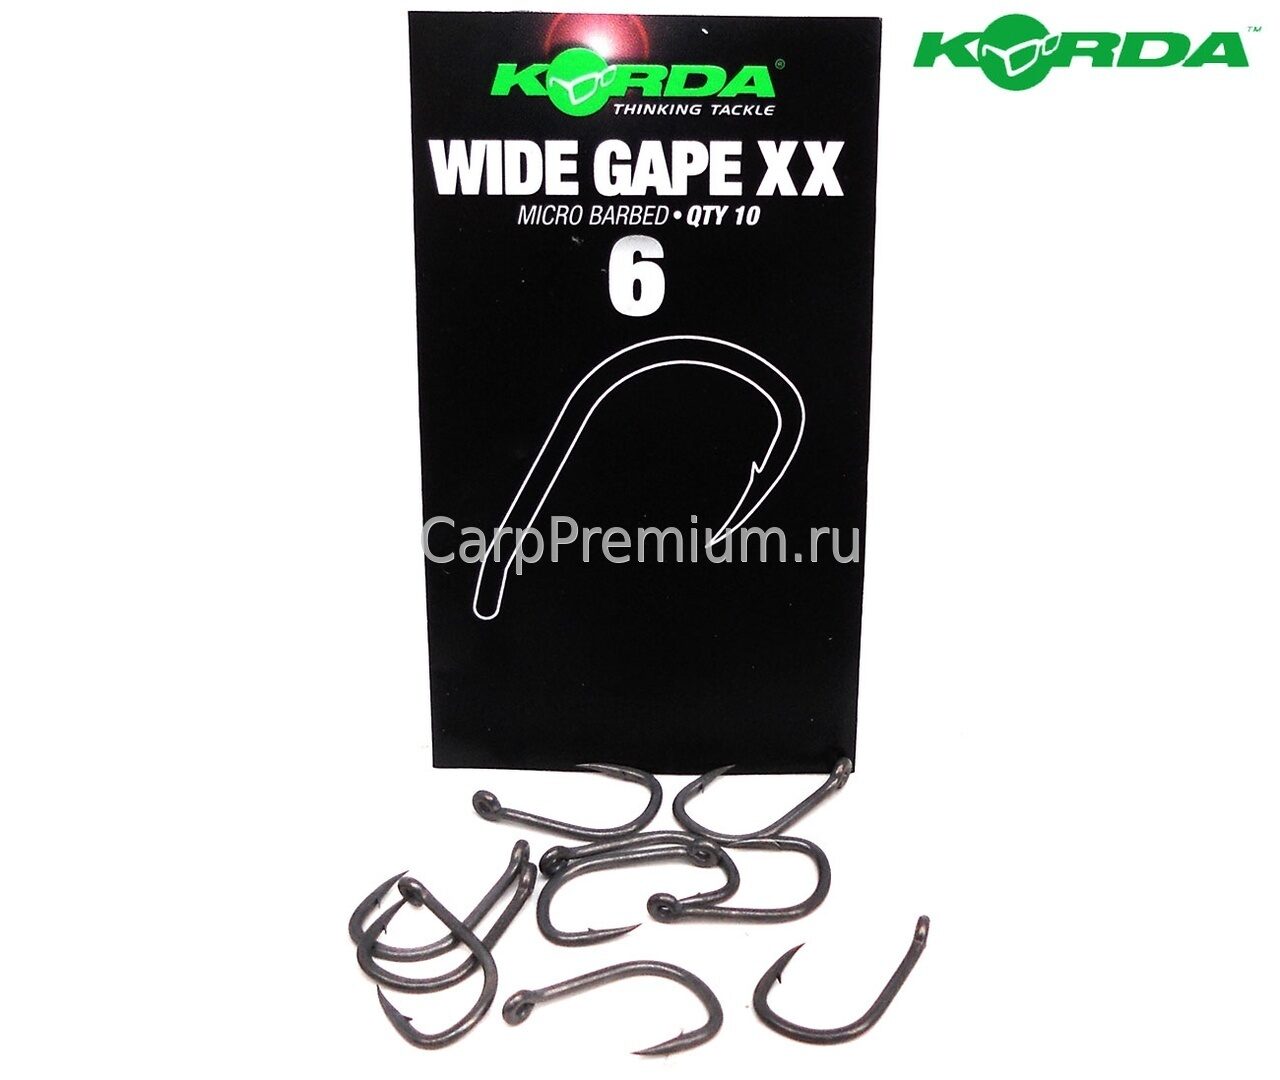 Карповые крючки Korda (Корда) - Wide Gape XX, Размер 6, 10 шт